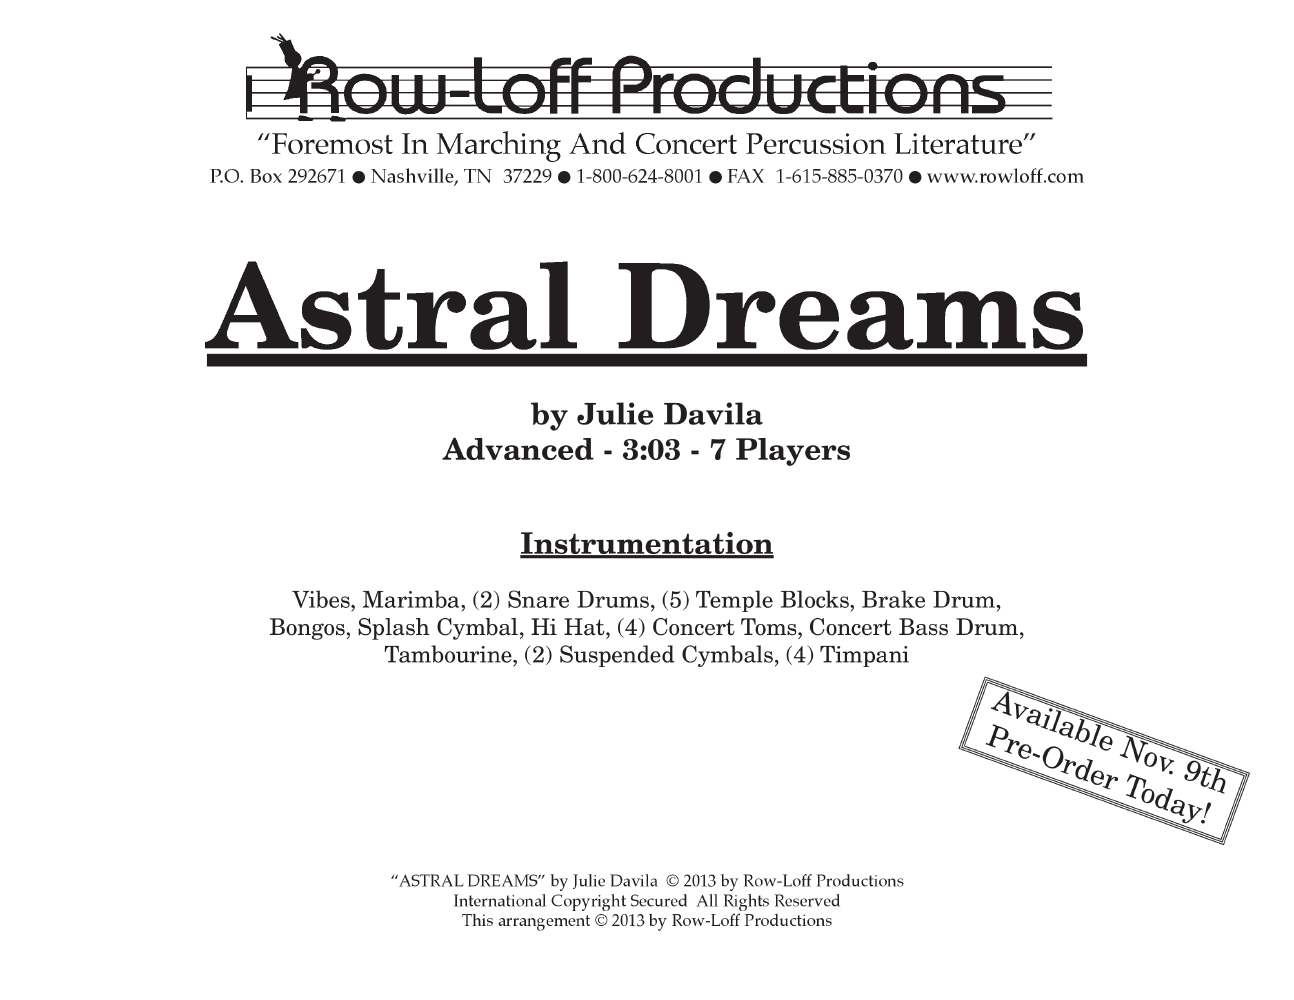 Astral Dreams Percussion Ensemble